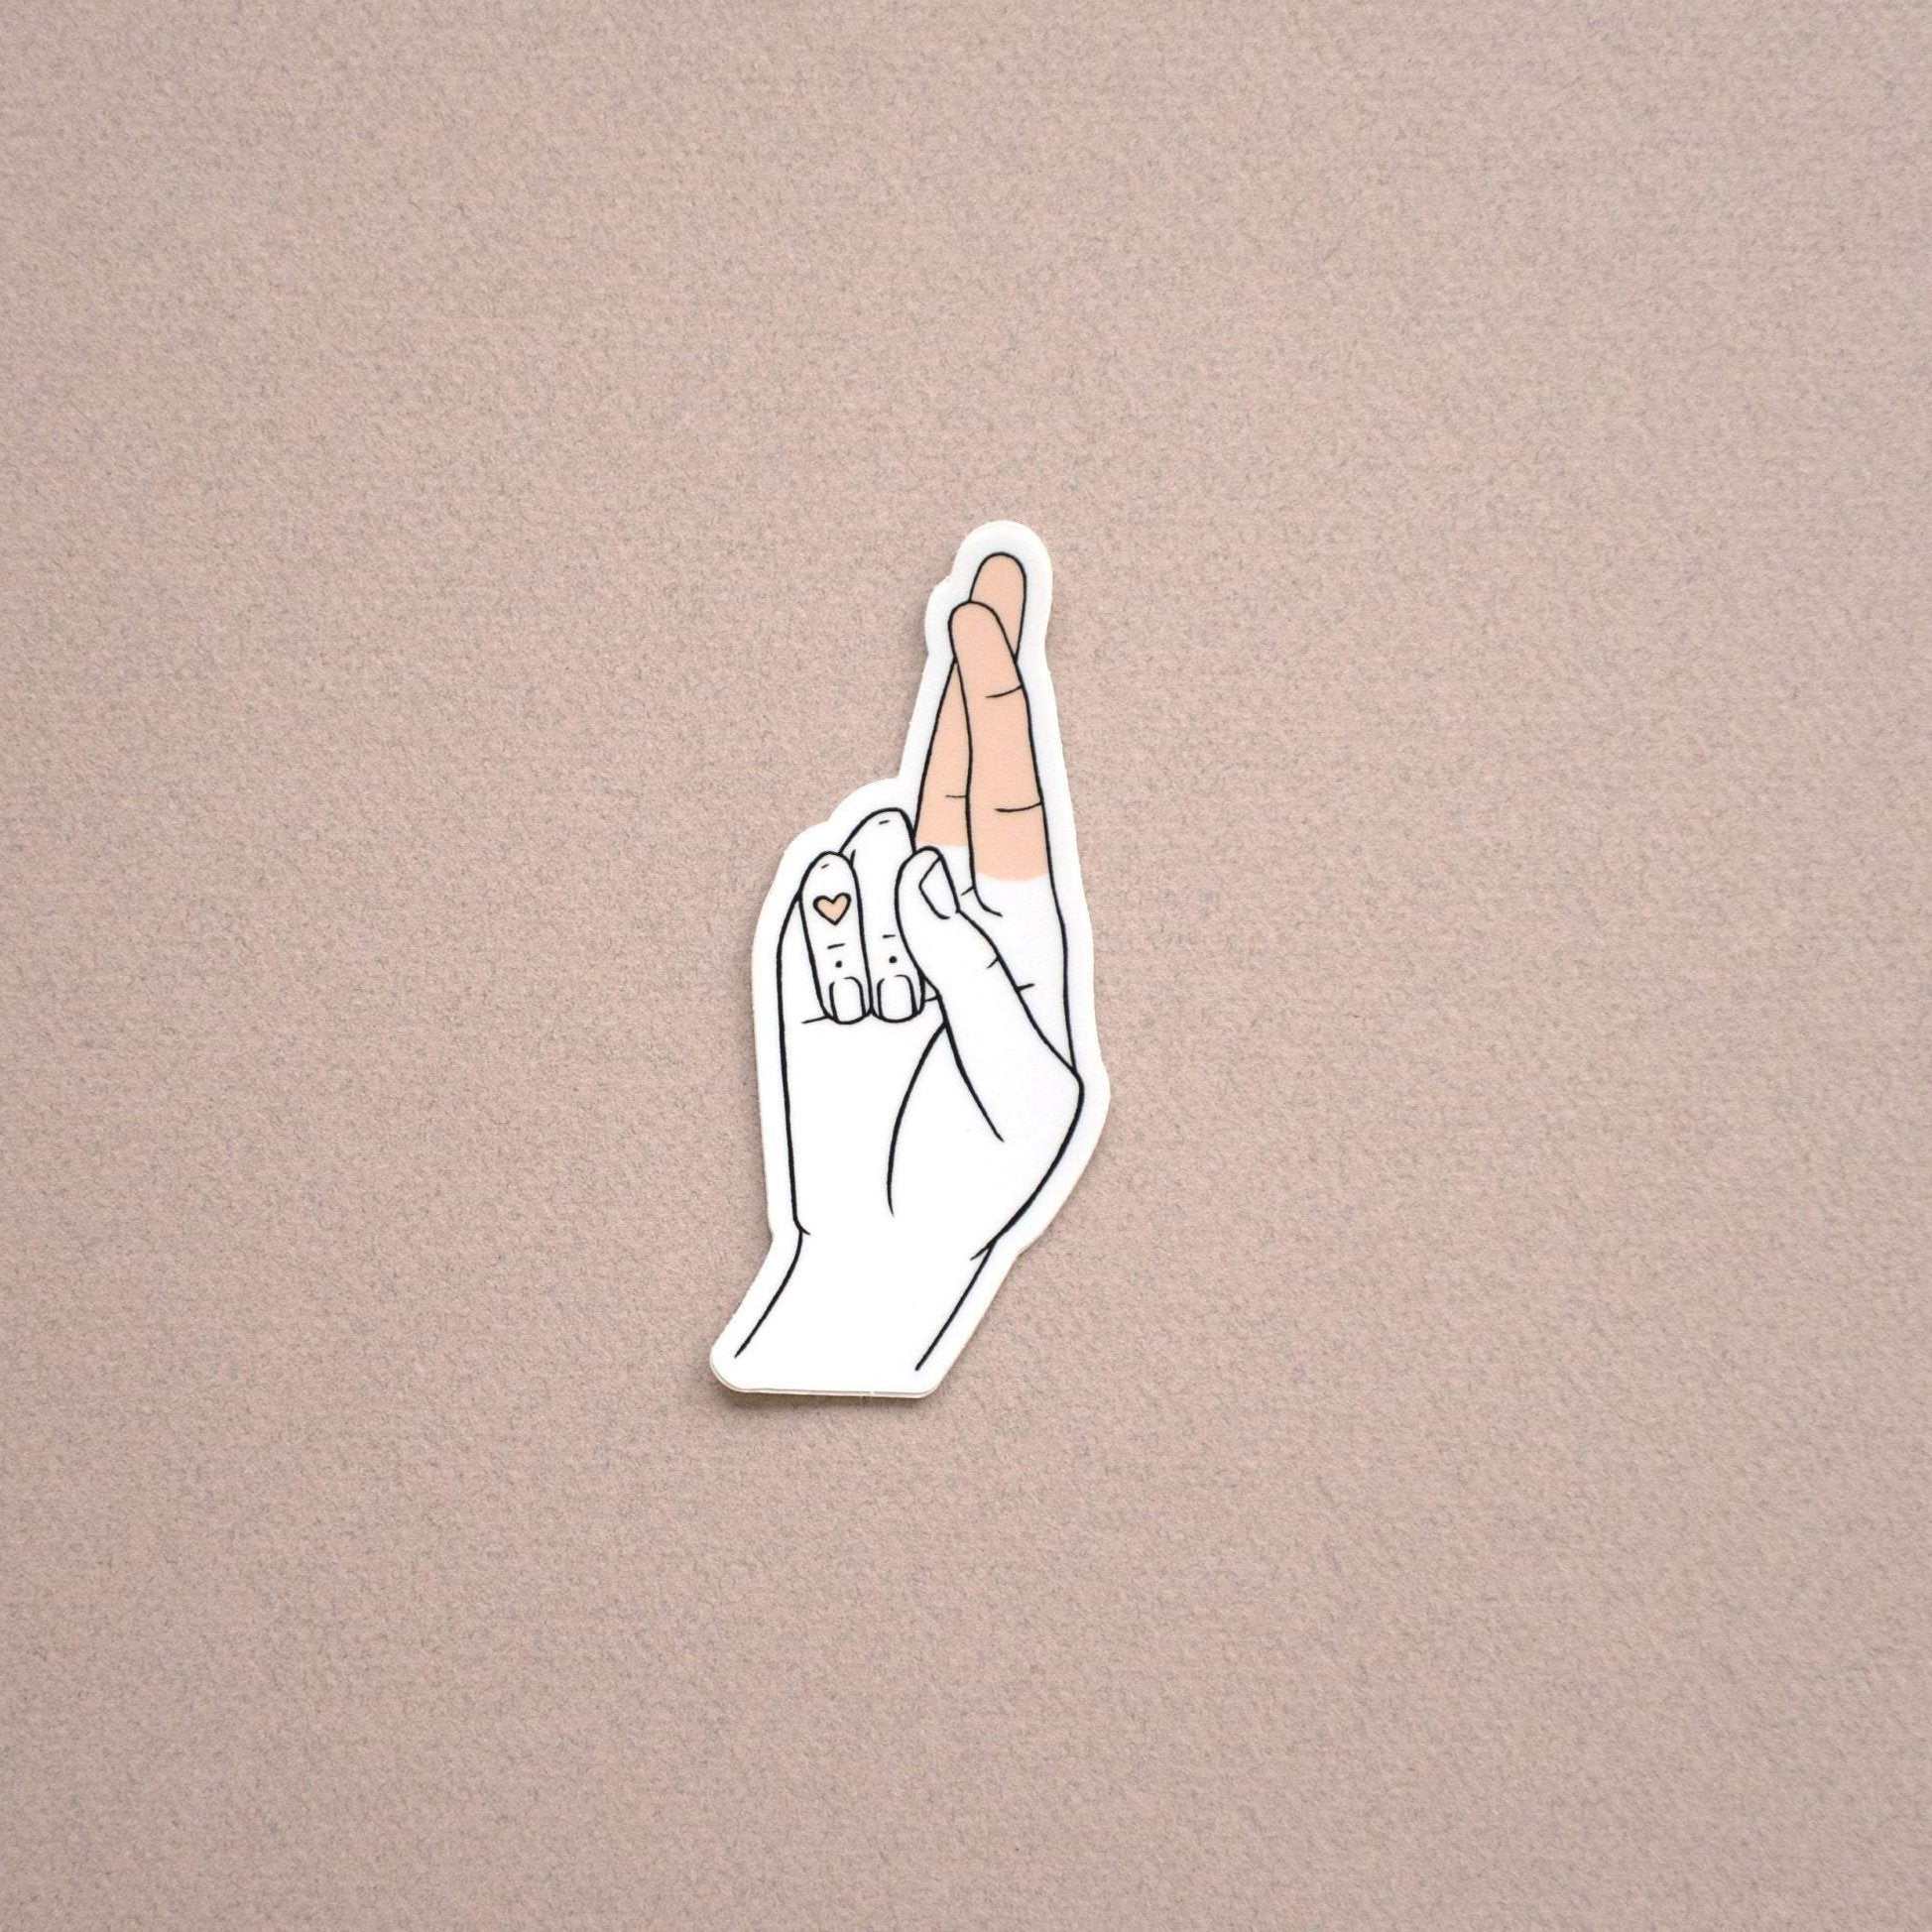 Hand Art Sticker, "Fingers Crossed"